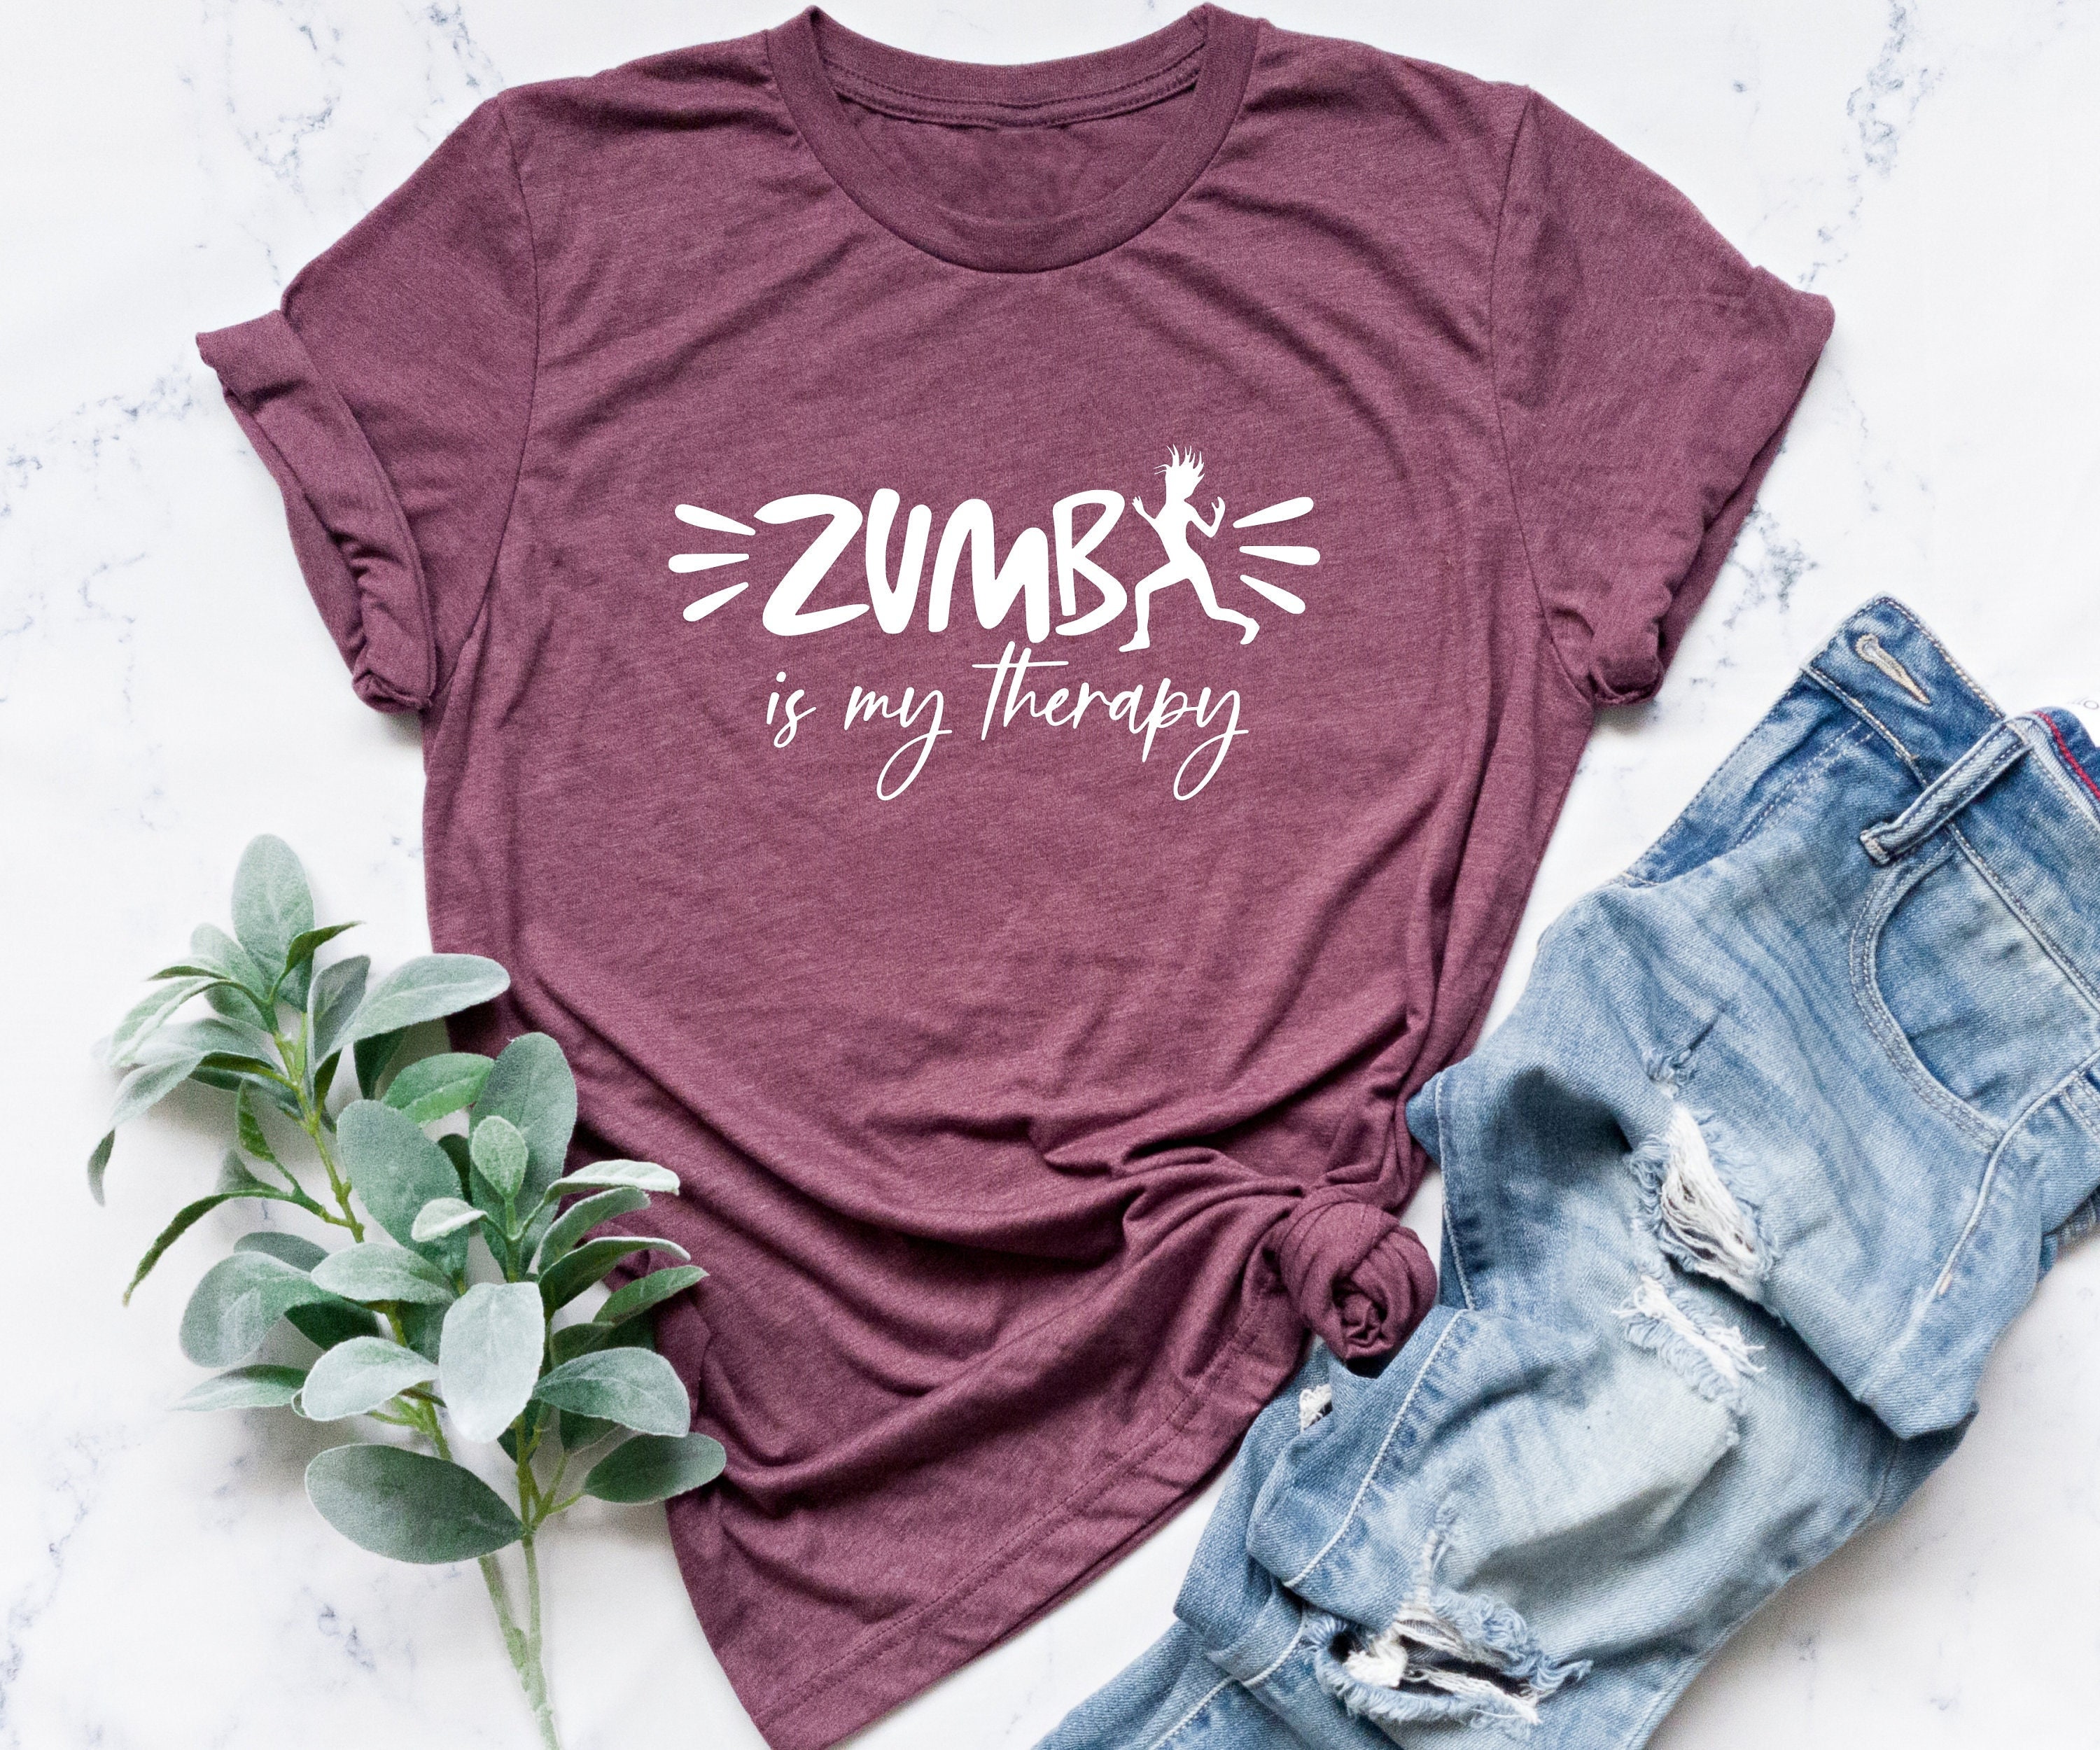 Zumba Dress - Buy Zumba Wear & Workout Clothes Online